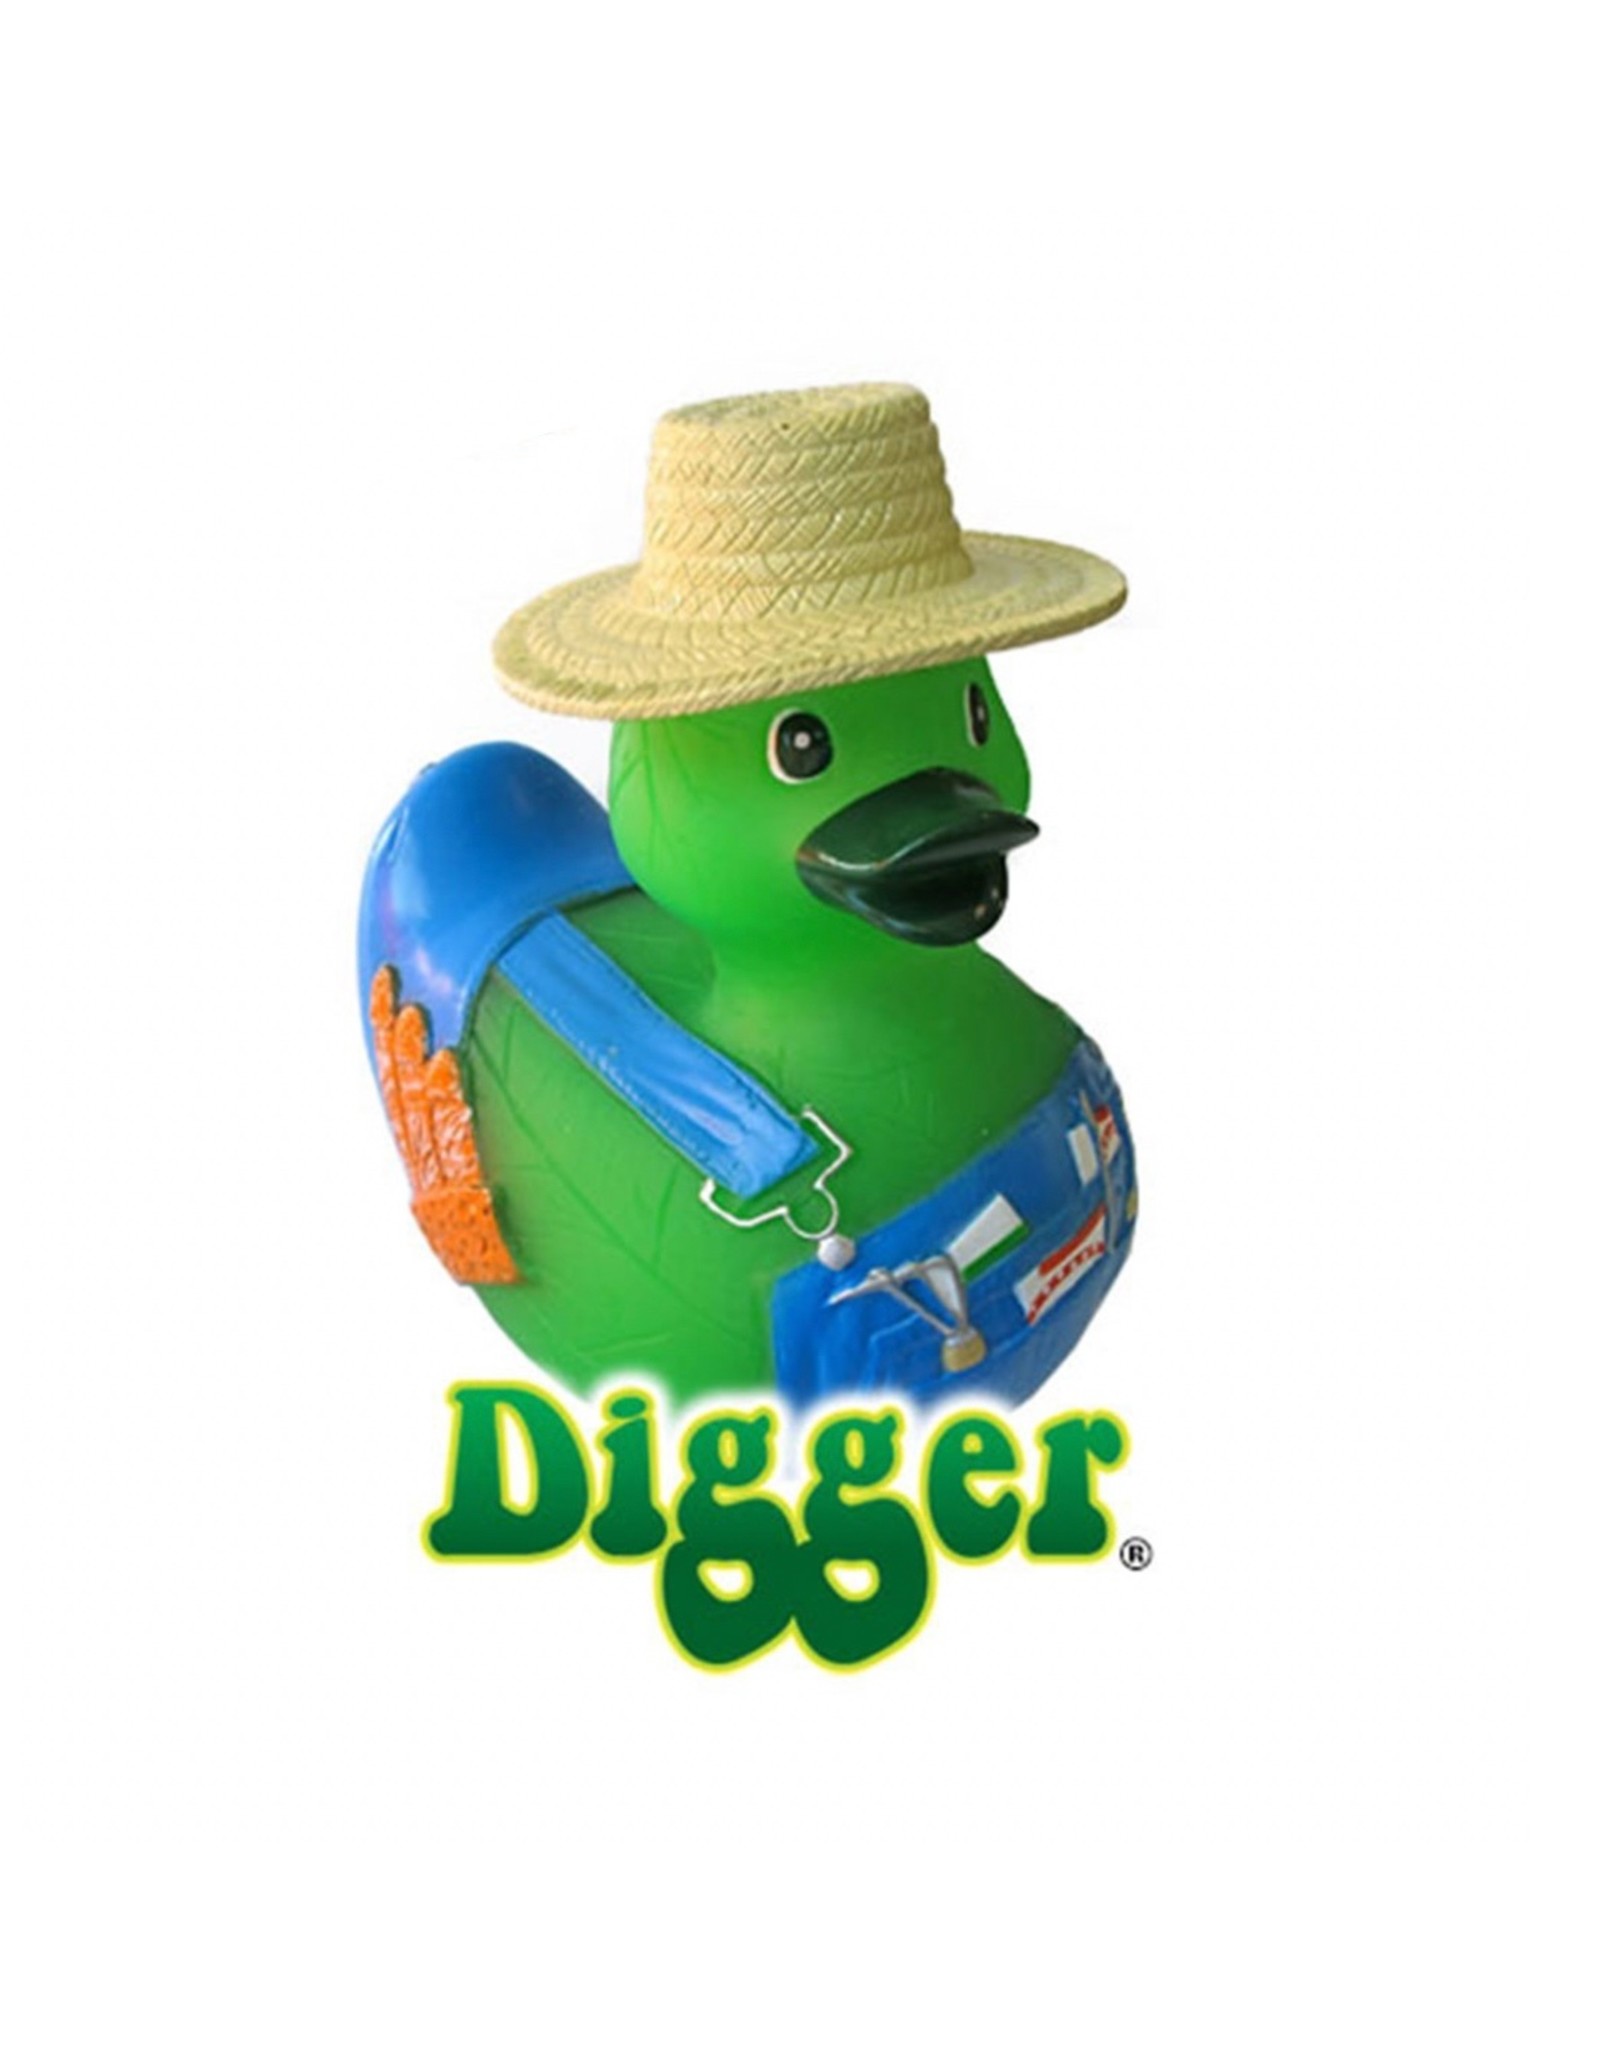 Digger the Farmer Rubber Duck